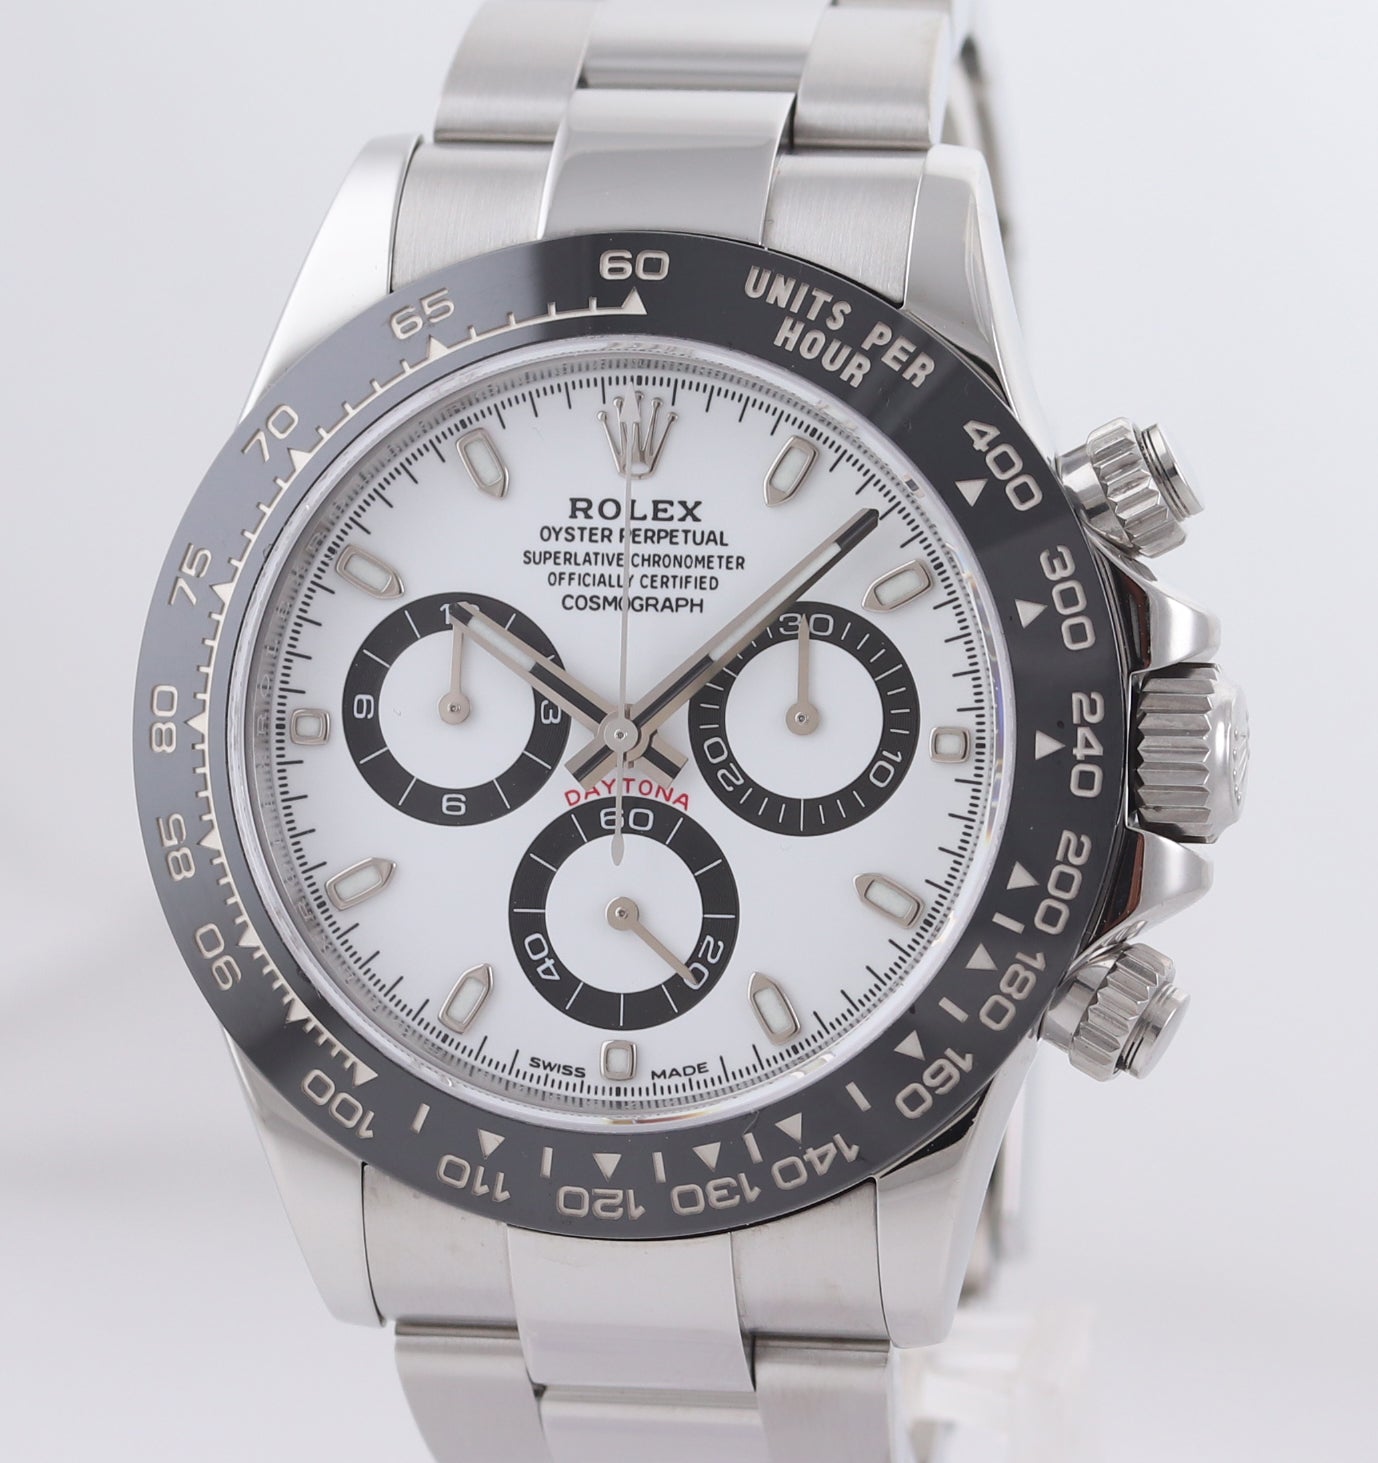 NEW 2019 PAPERS Rolex Daytona 116500LN White Ceramic Panda 40mm Steel Watch Box